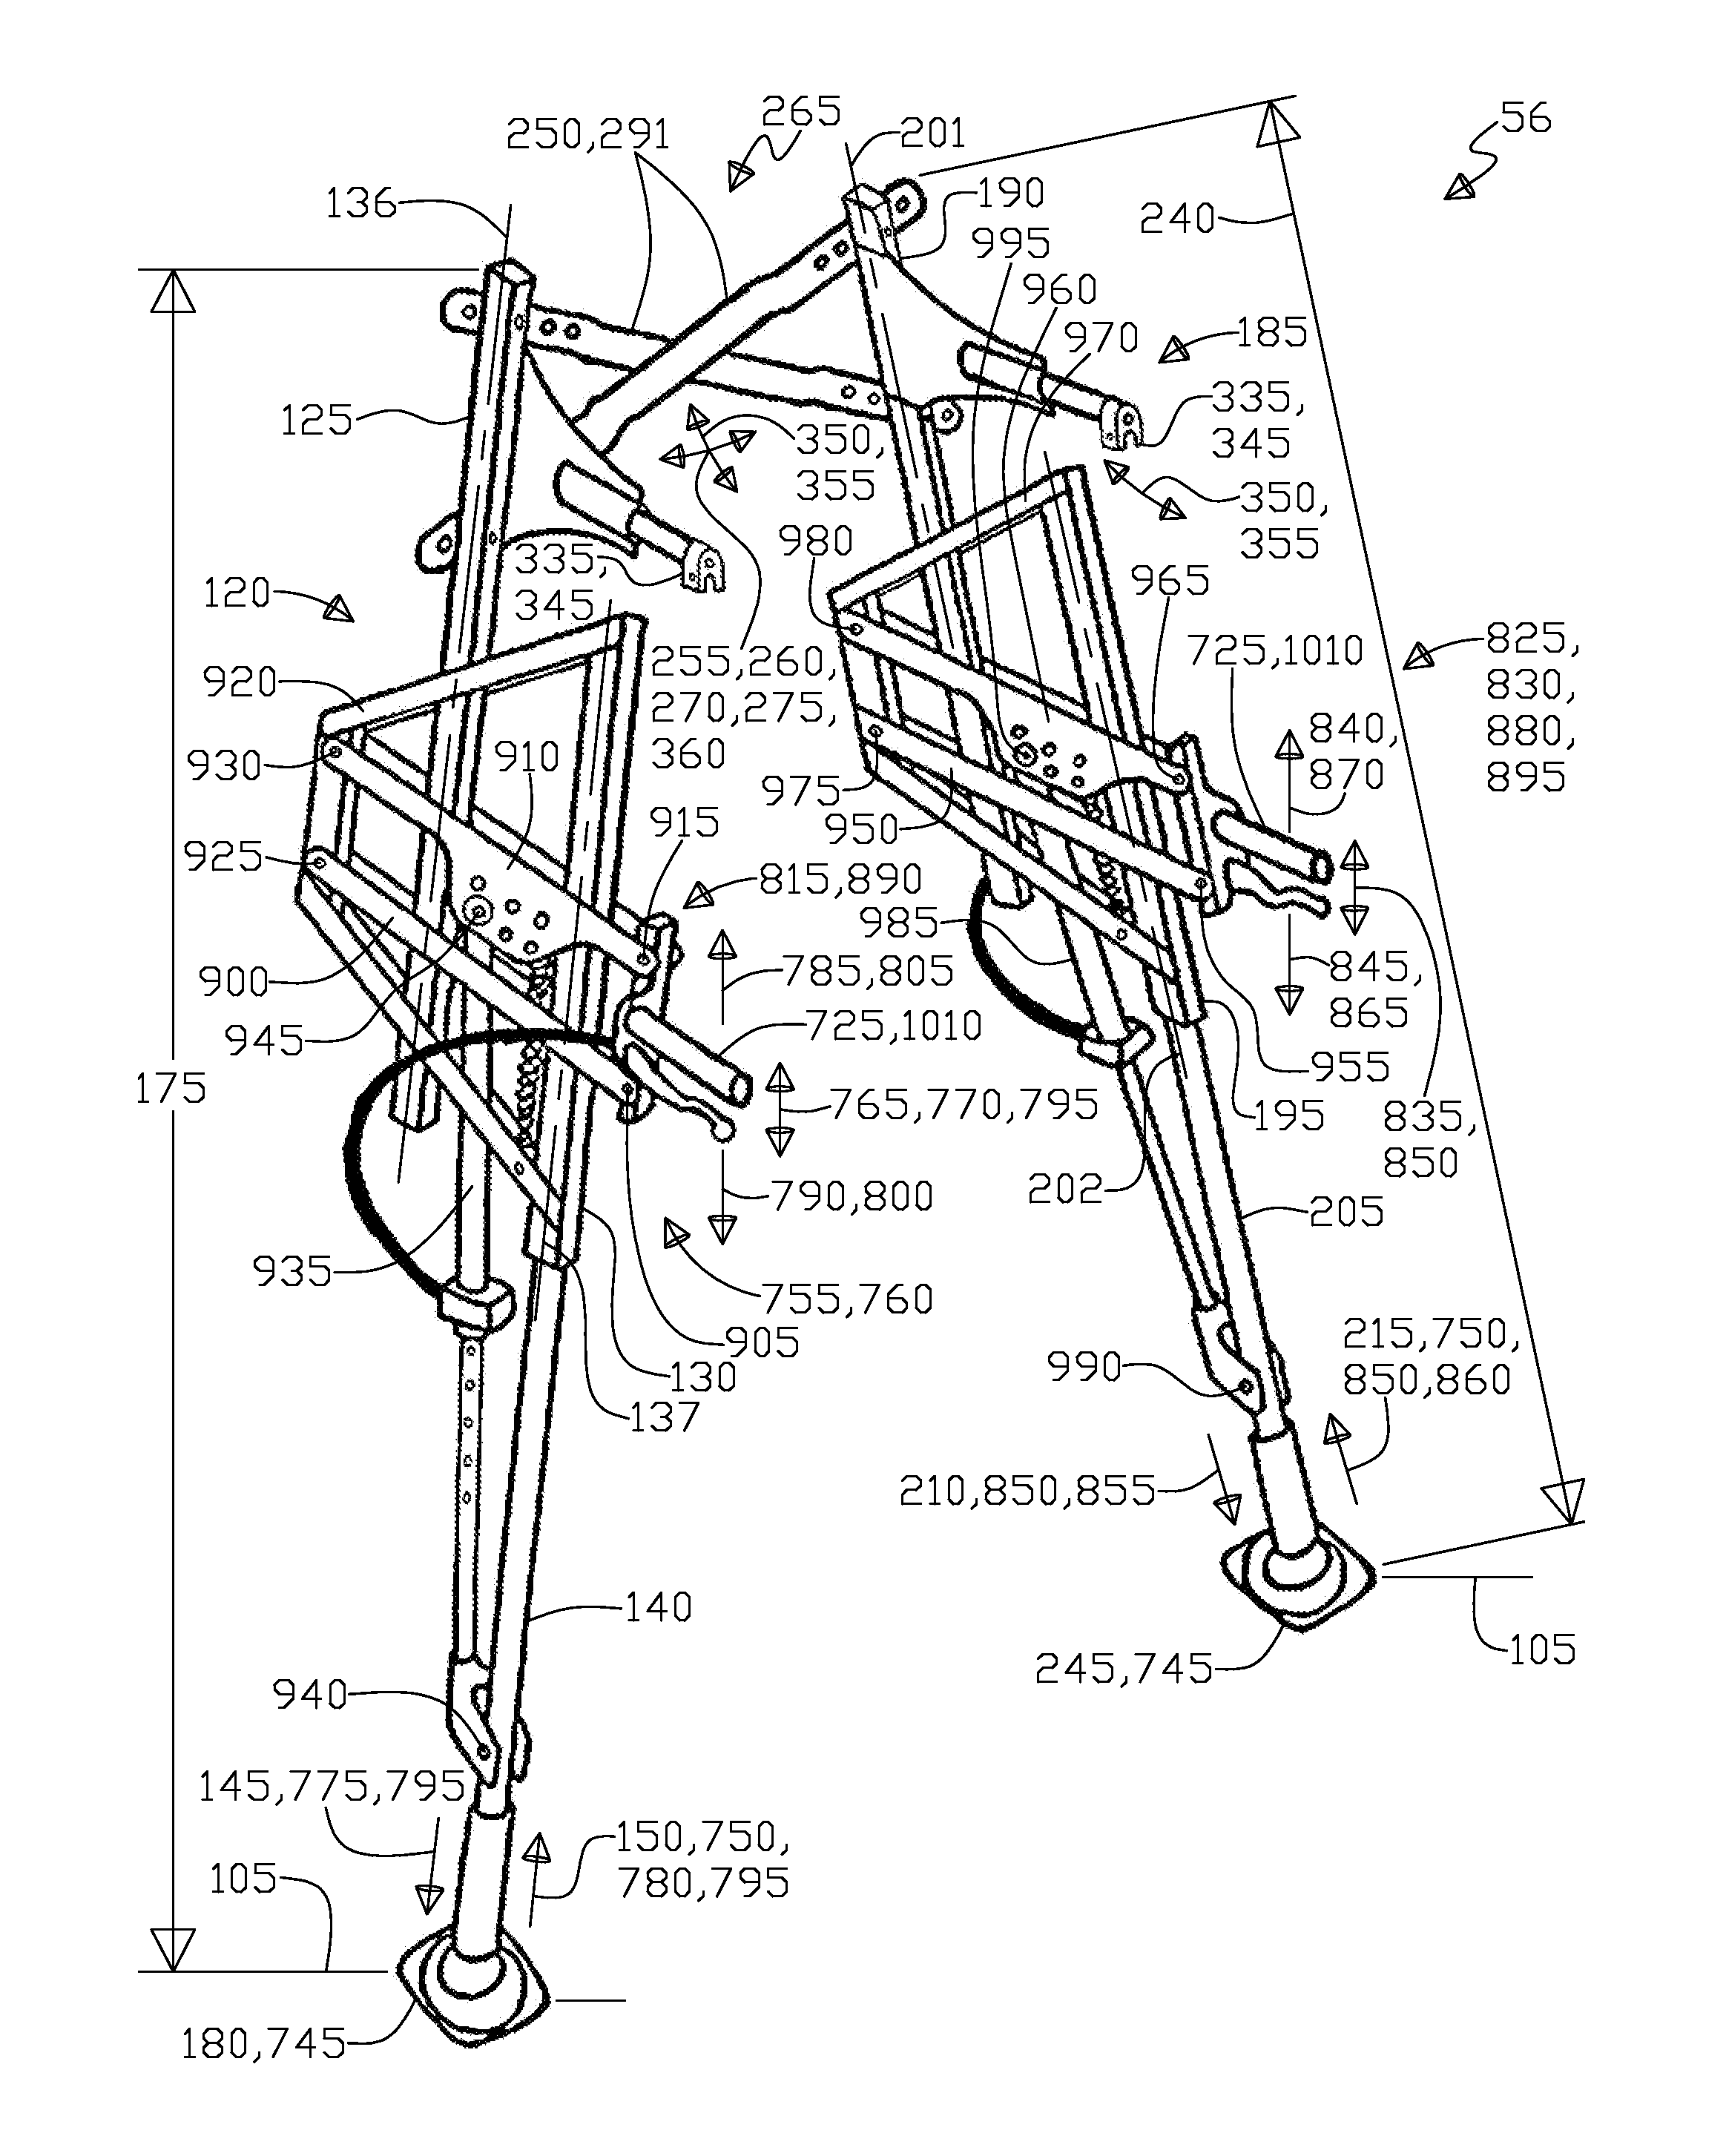 External Structural Brace Apparatus